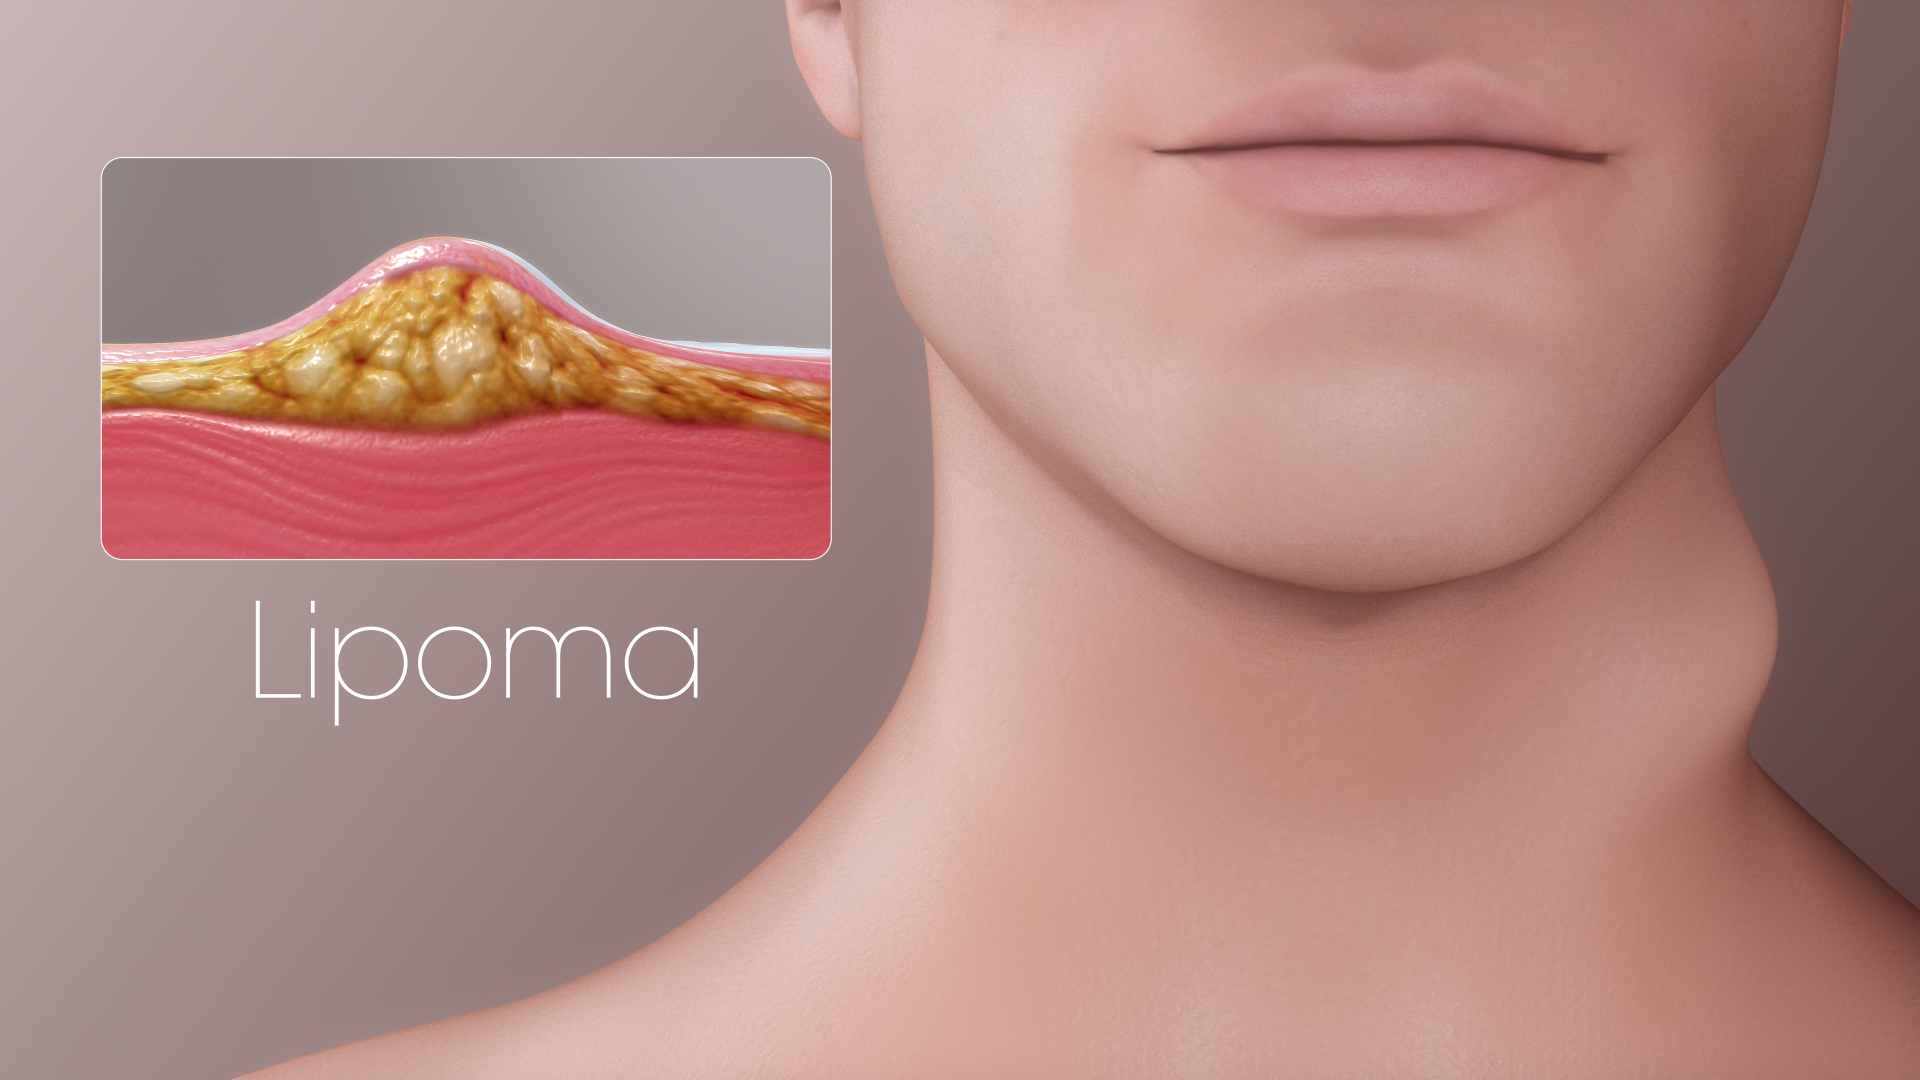 A 3D Medical illustration of Lipoma